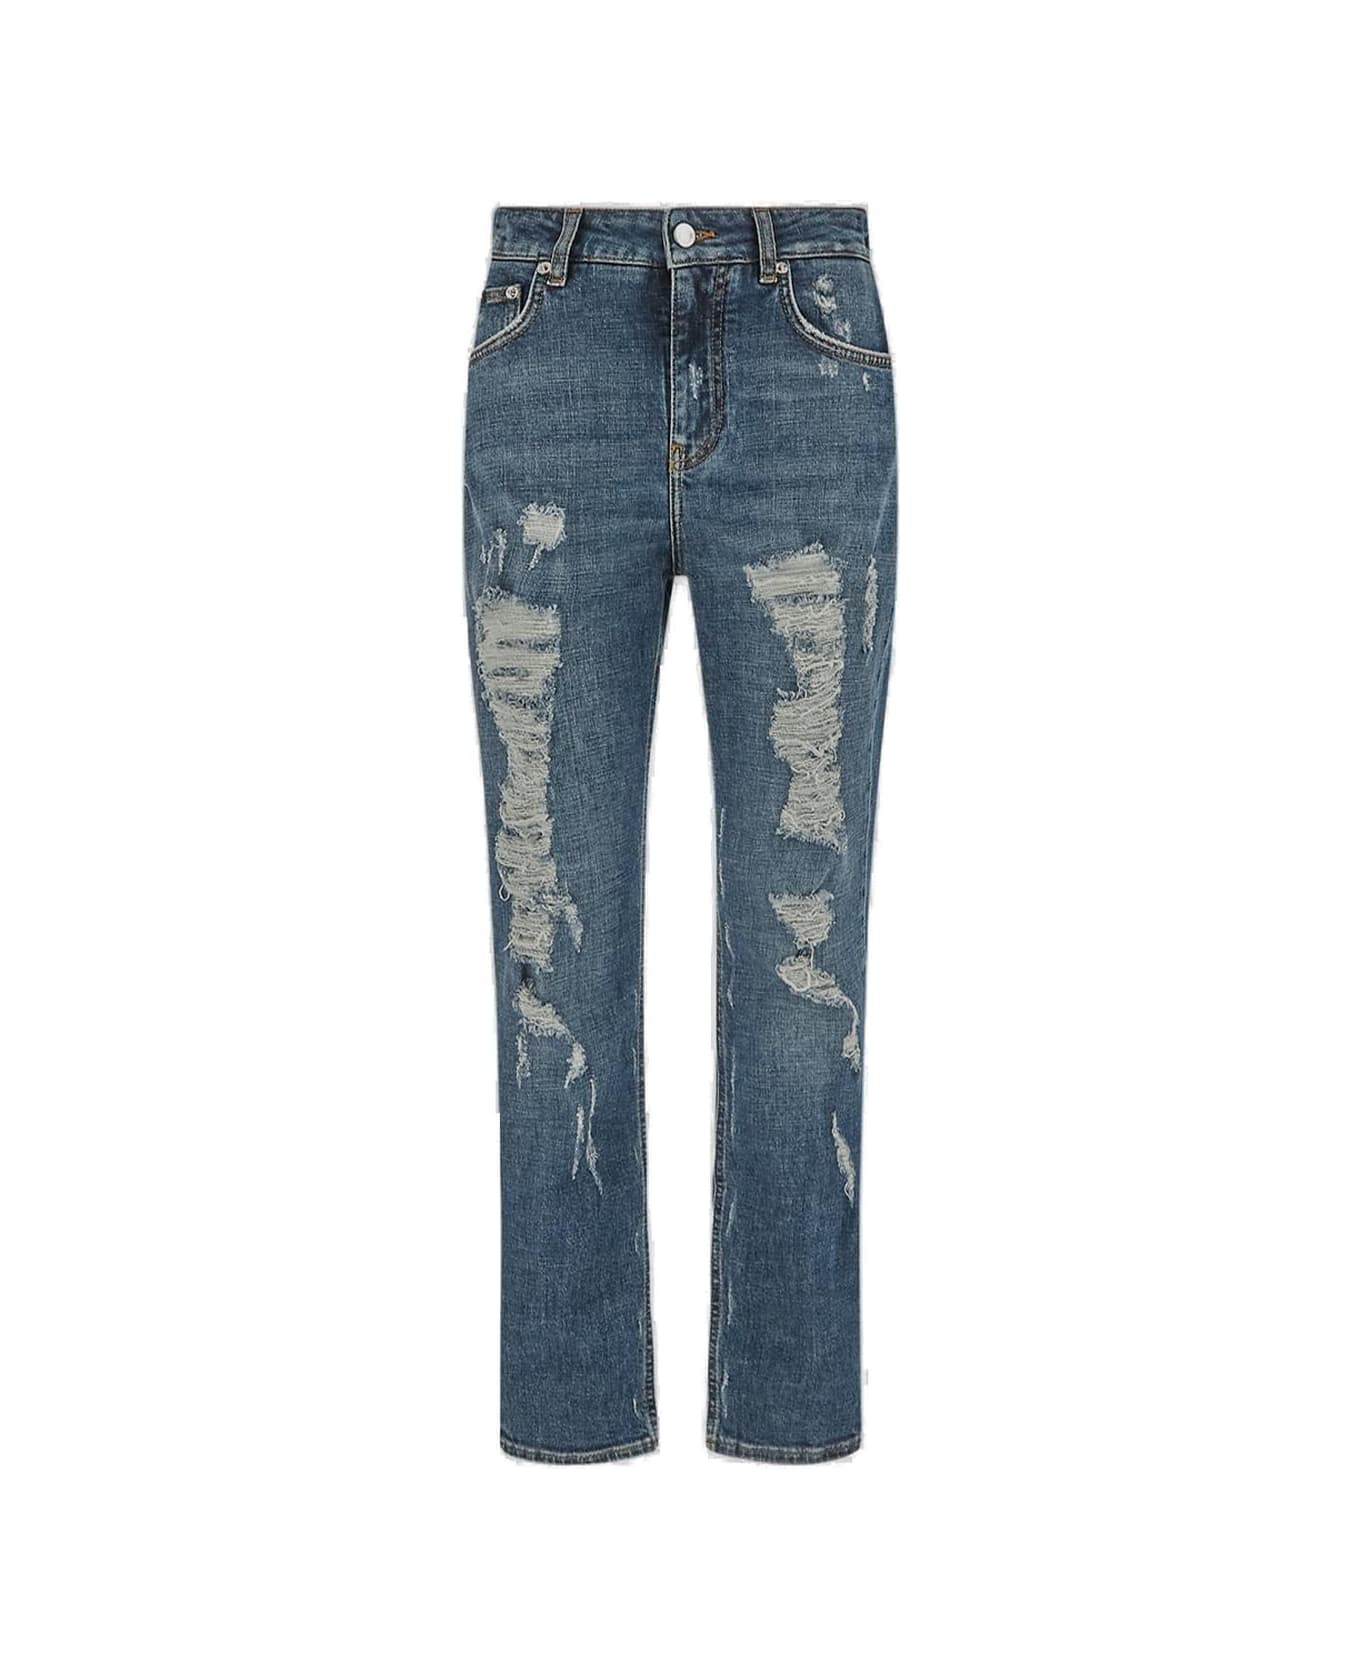 Dolce & Gabbana Distressed Straight Leg Cropped Jeans - Neutro デニム